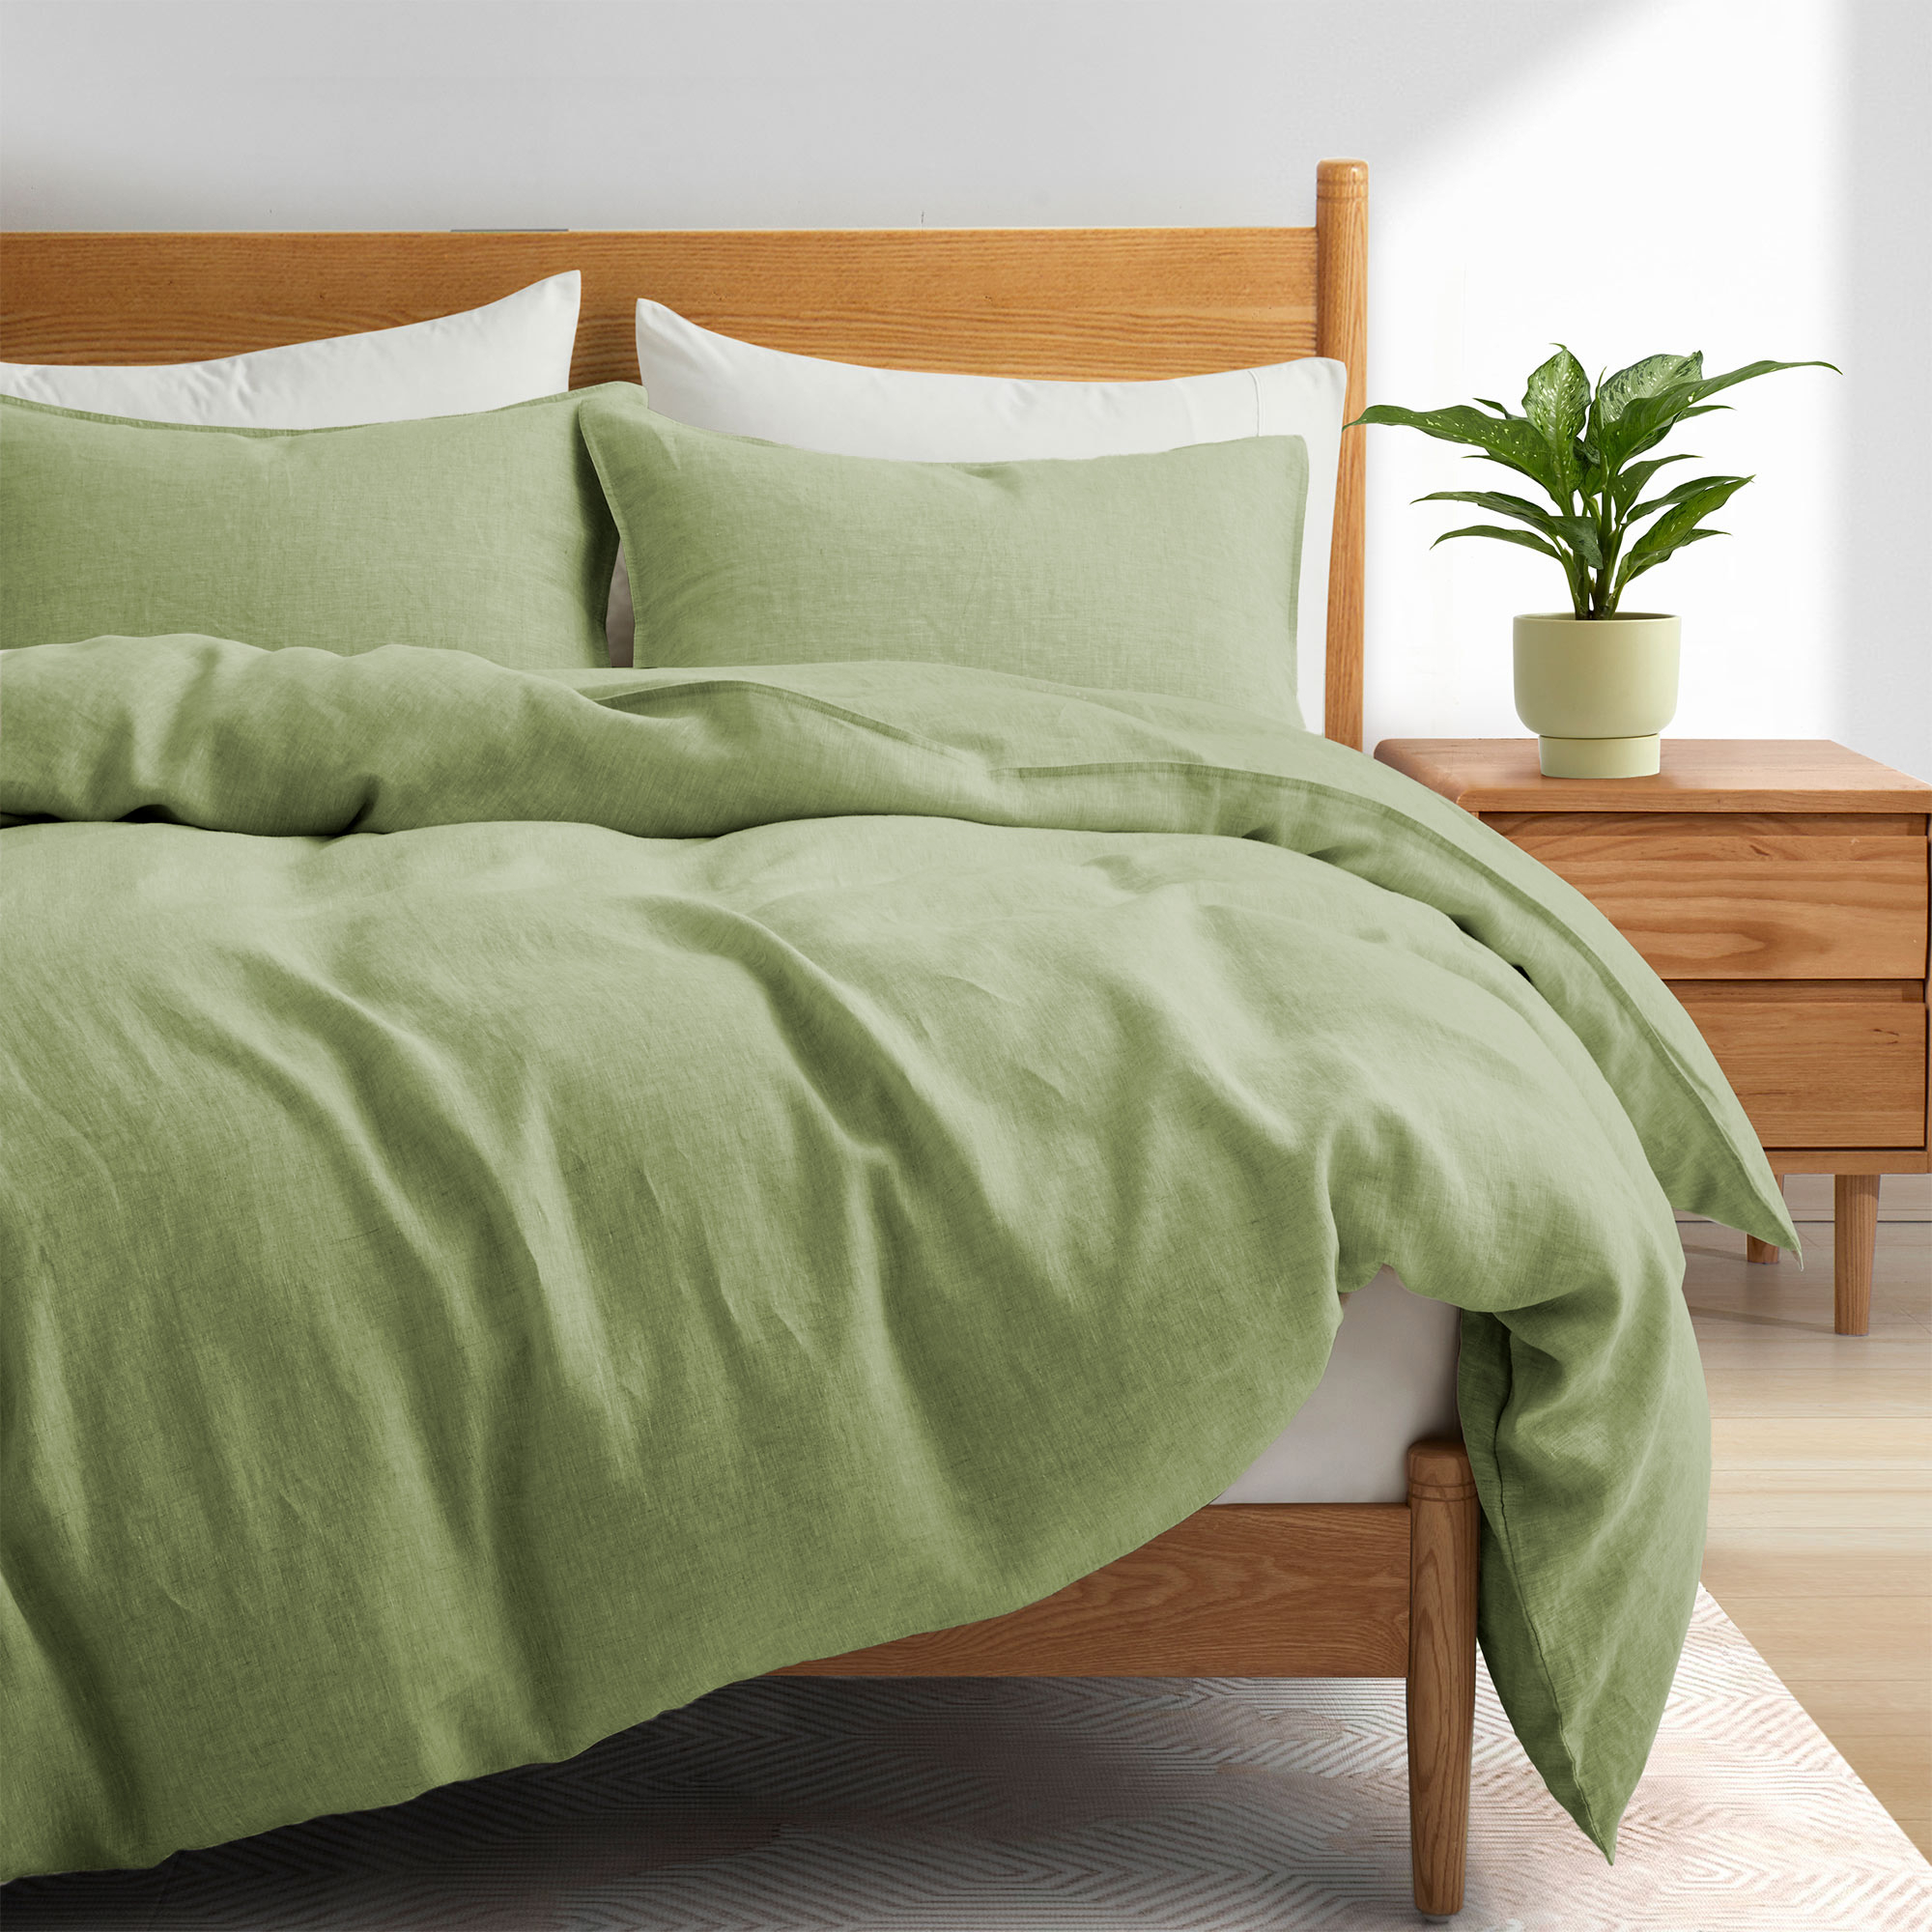 Premium Flax Linen Duvet Cover Set With Pillow Shams Breathable Moisture Wicking Bedding Set - Light Green, King